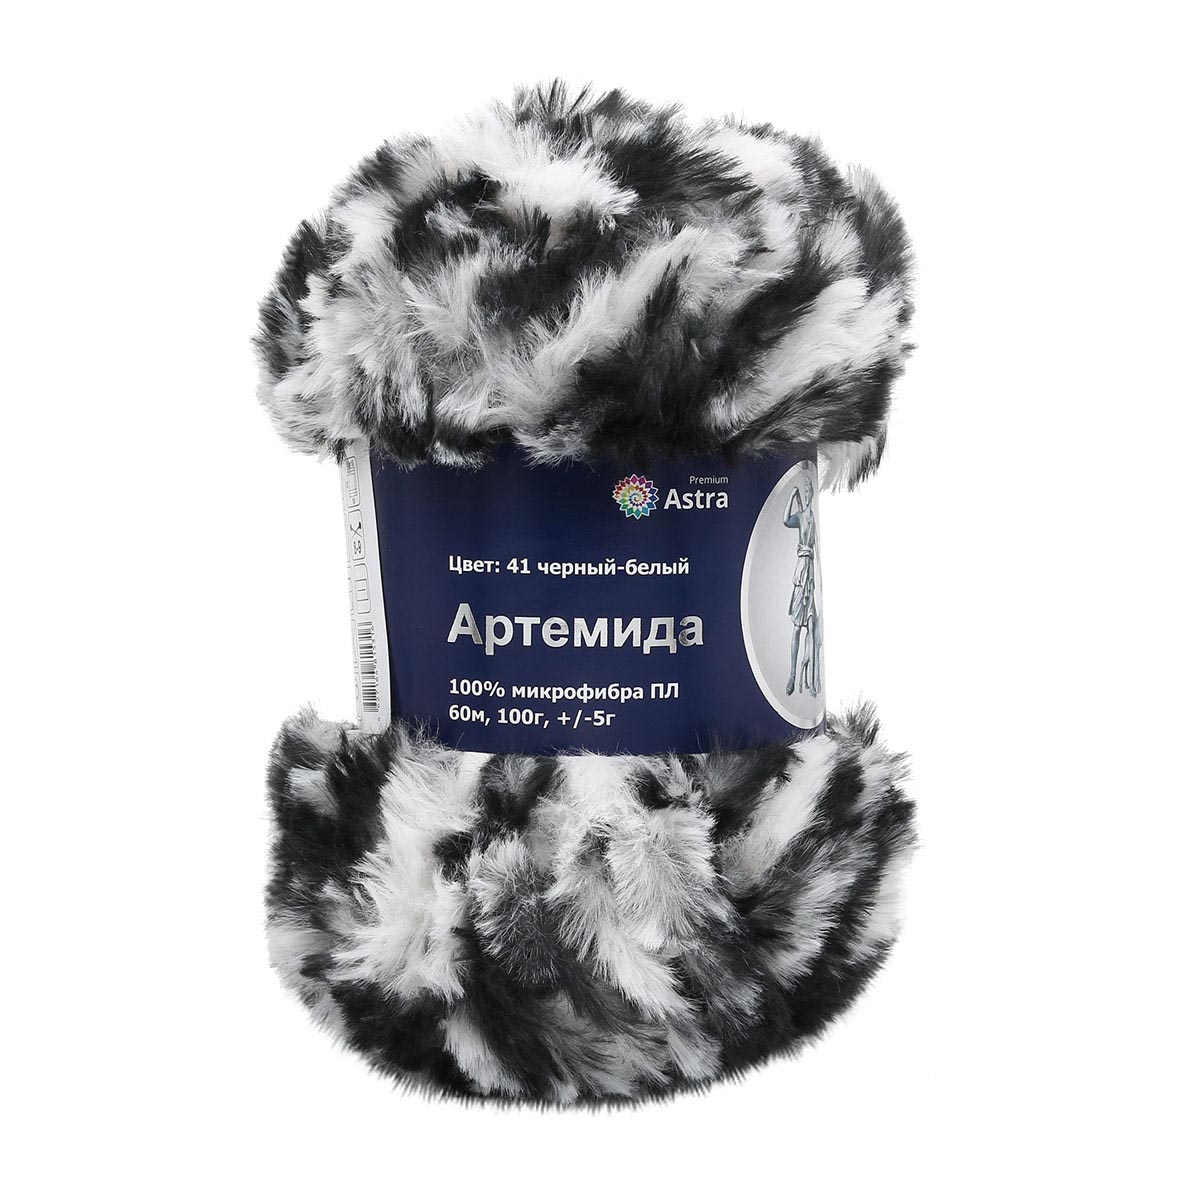 Astra Premium Артемида 41 черно-белый